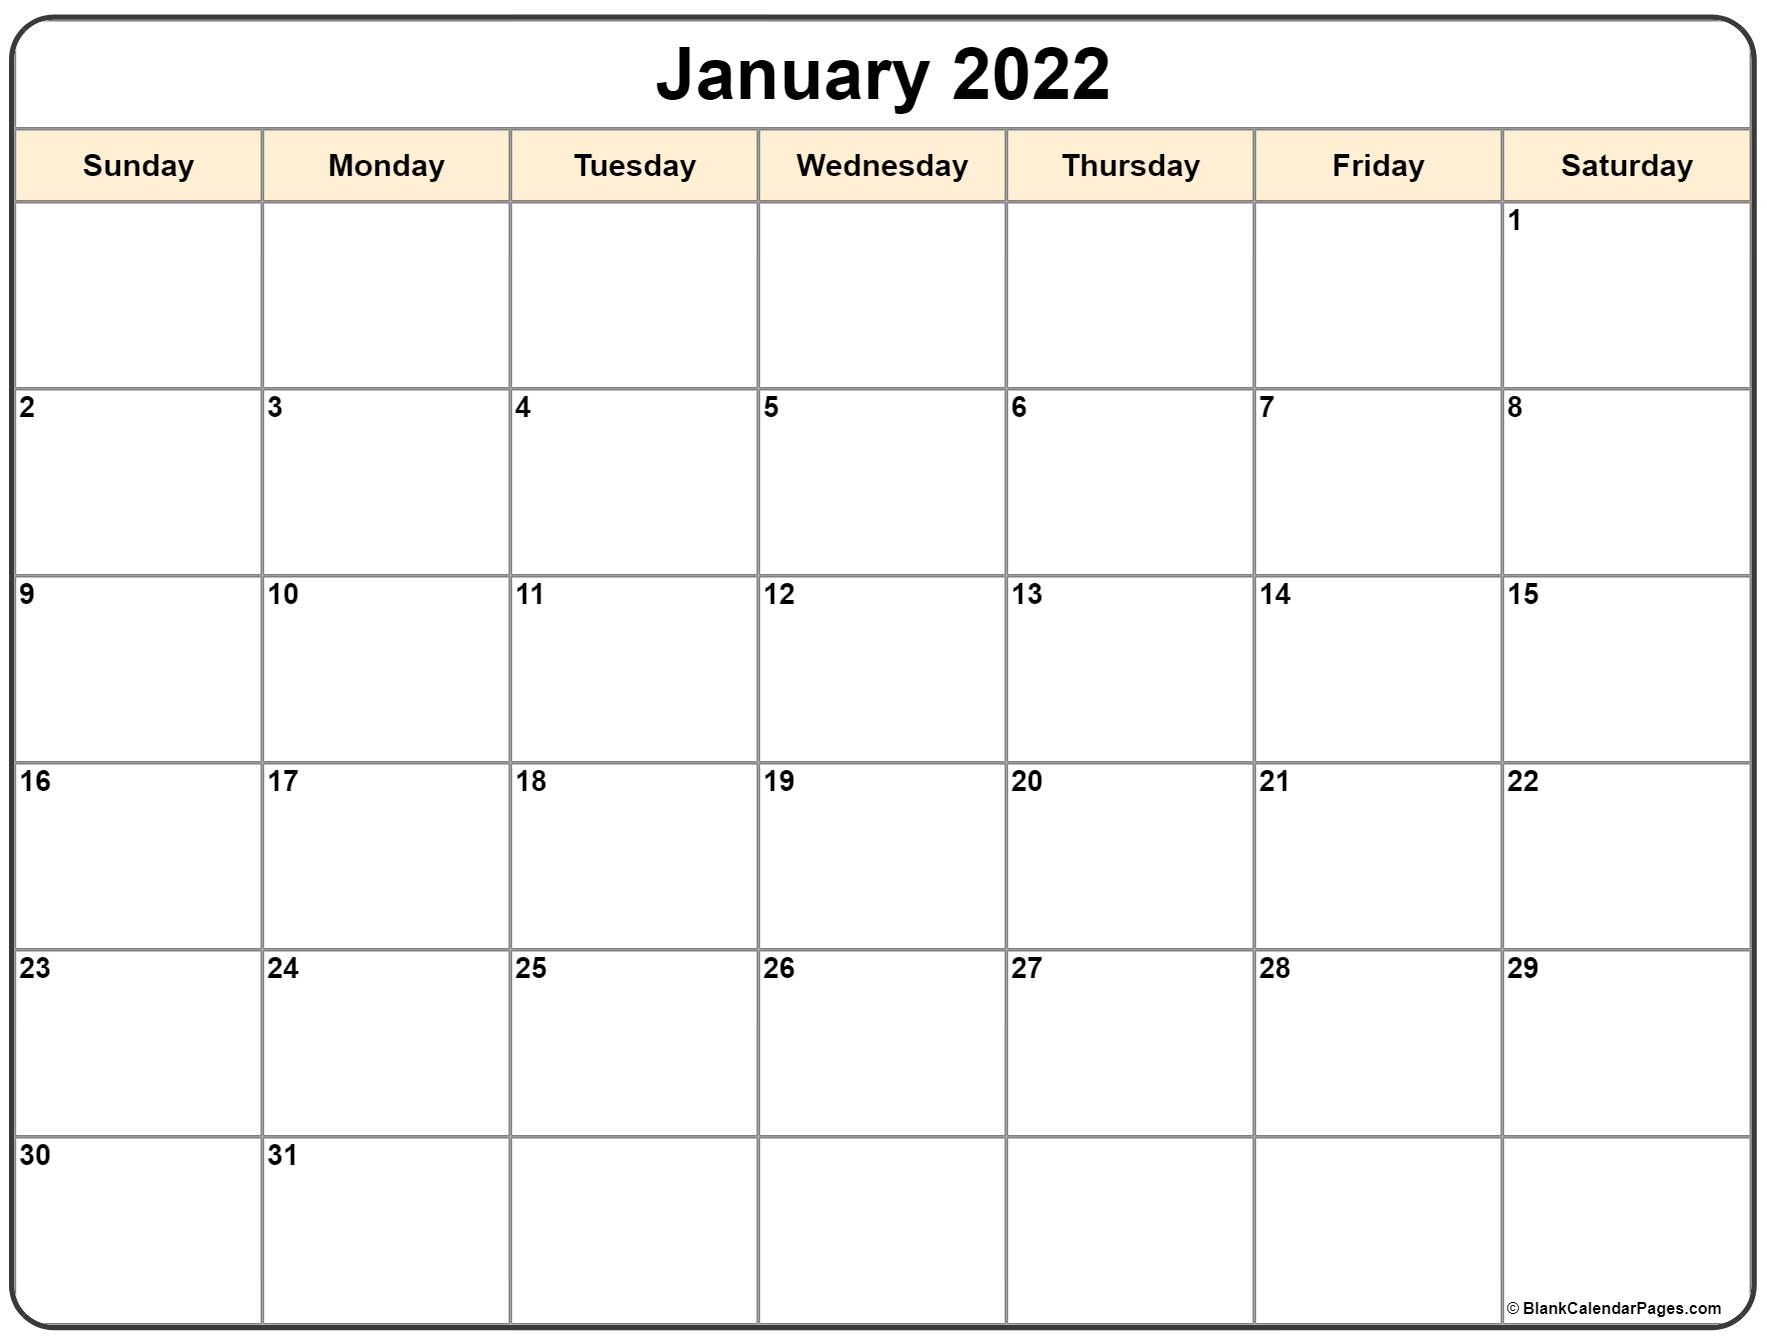 January 2022 Calendar | Free Printable Monthly Calendars